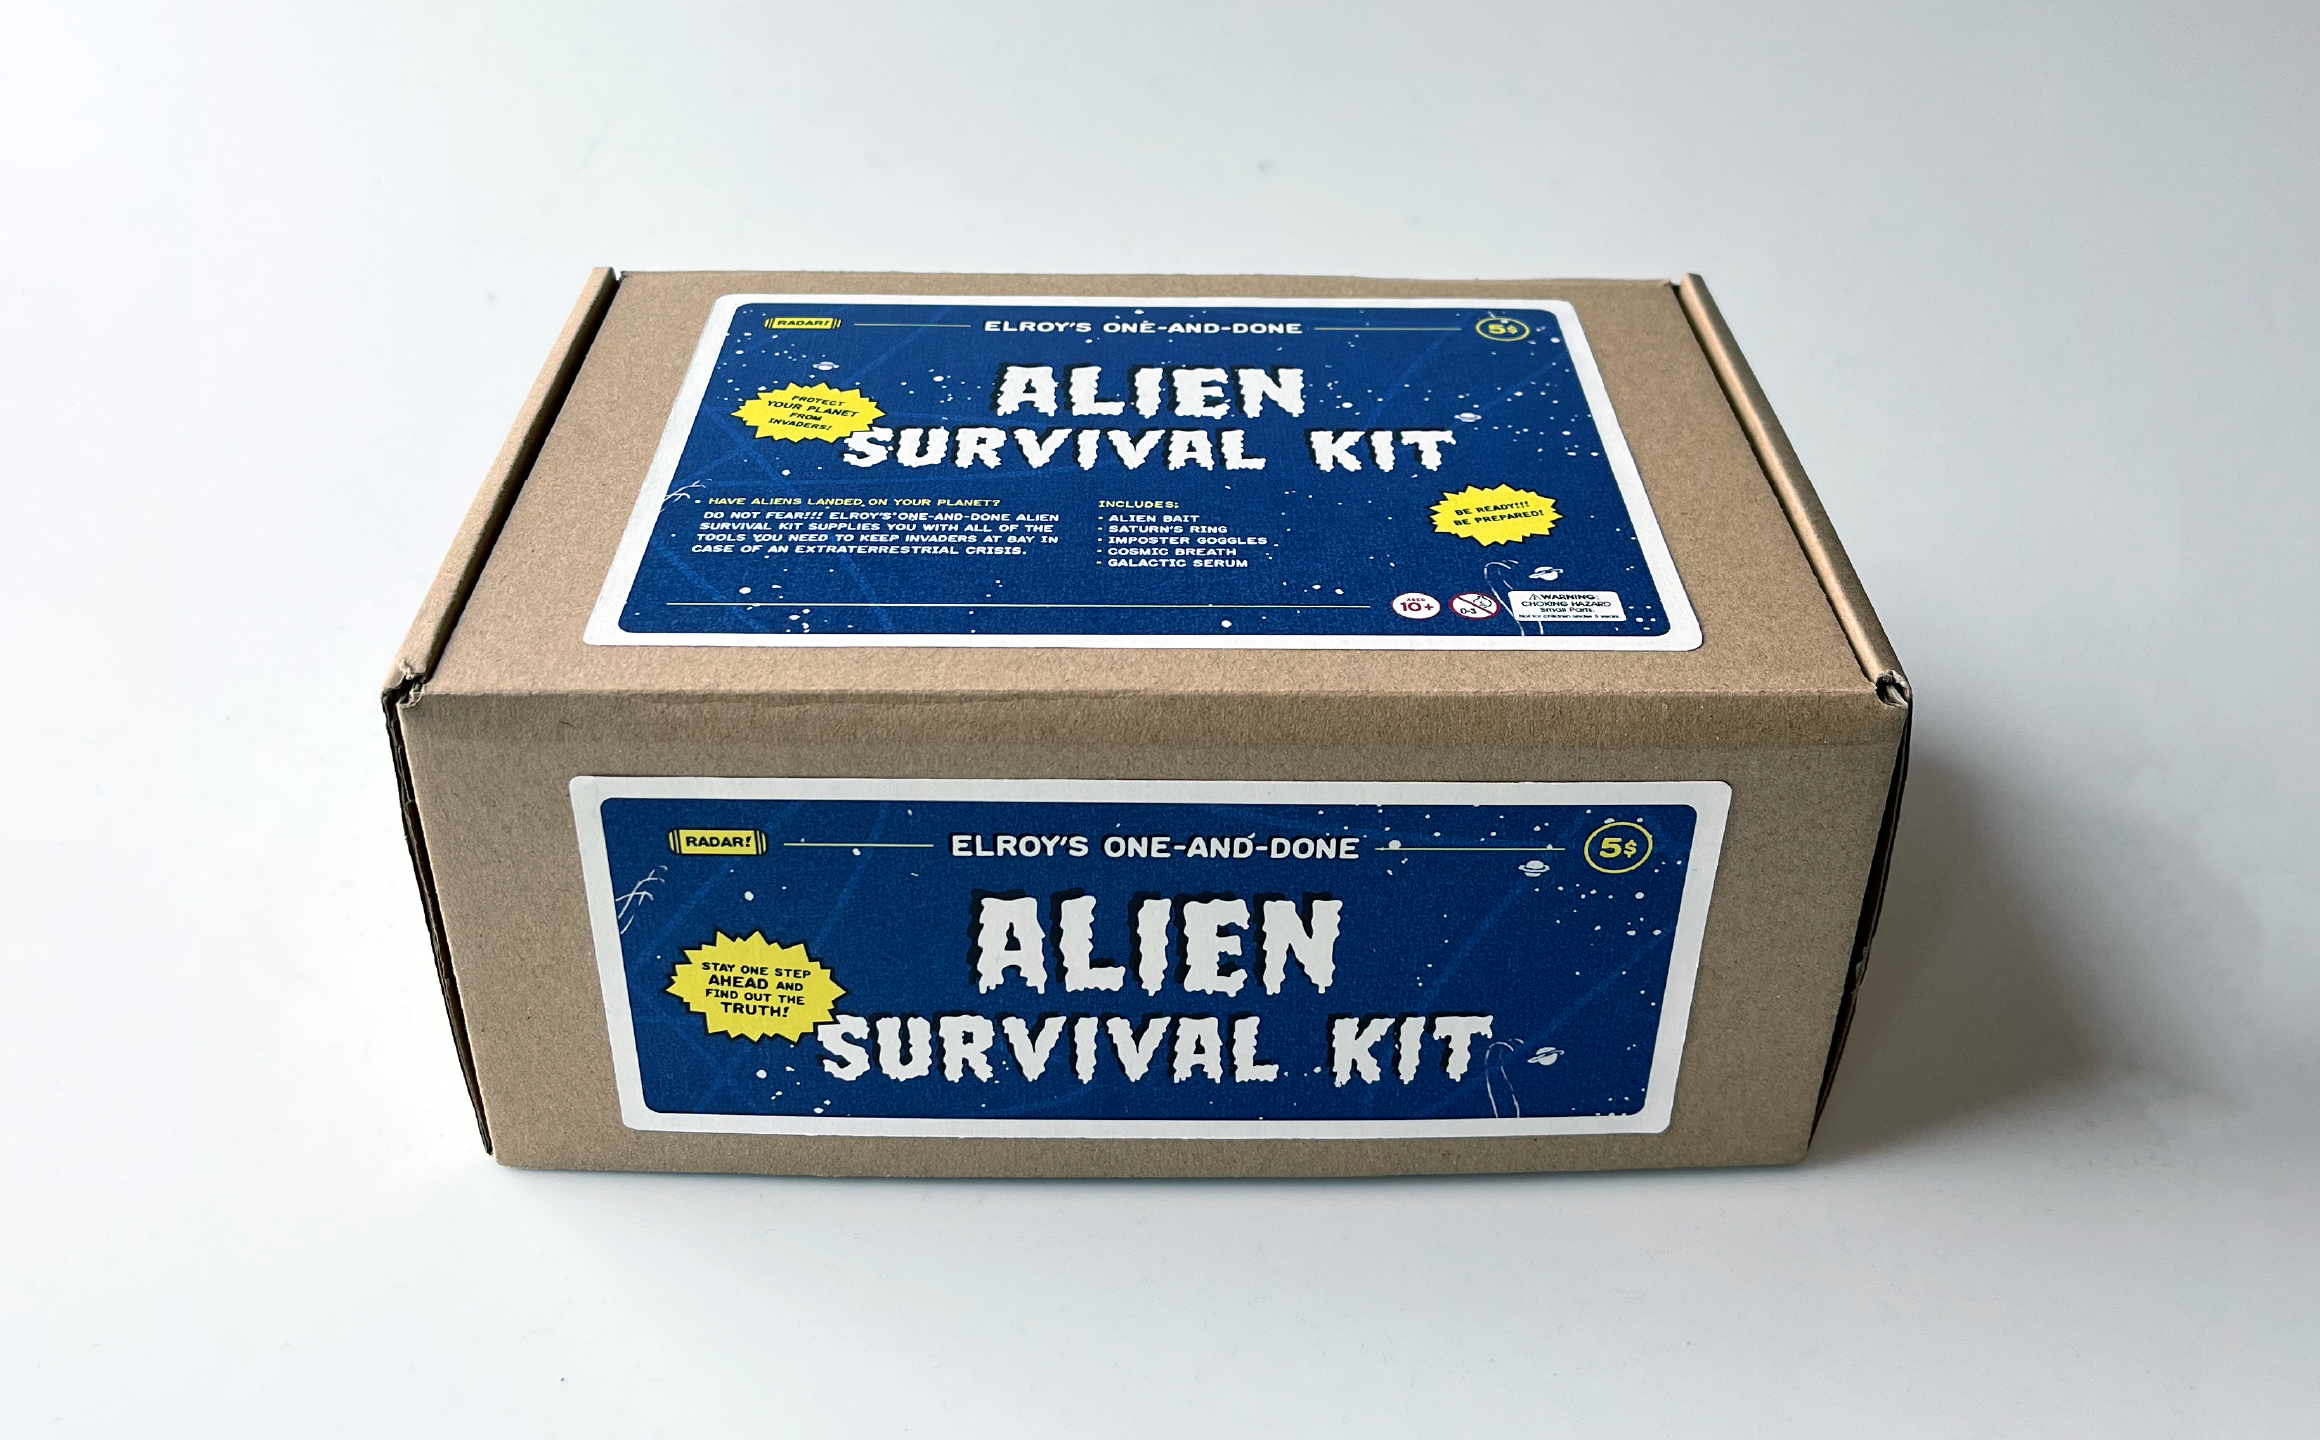 Alien Survival Kit box image